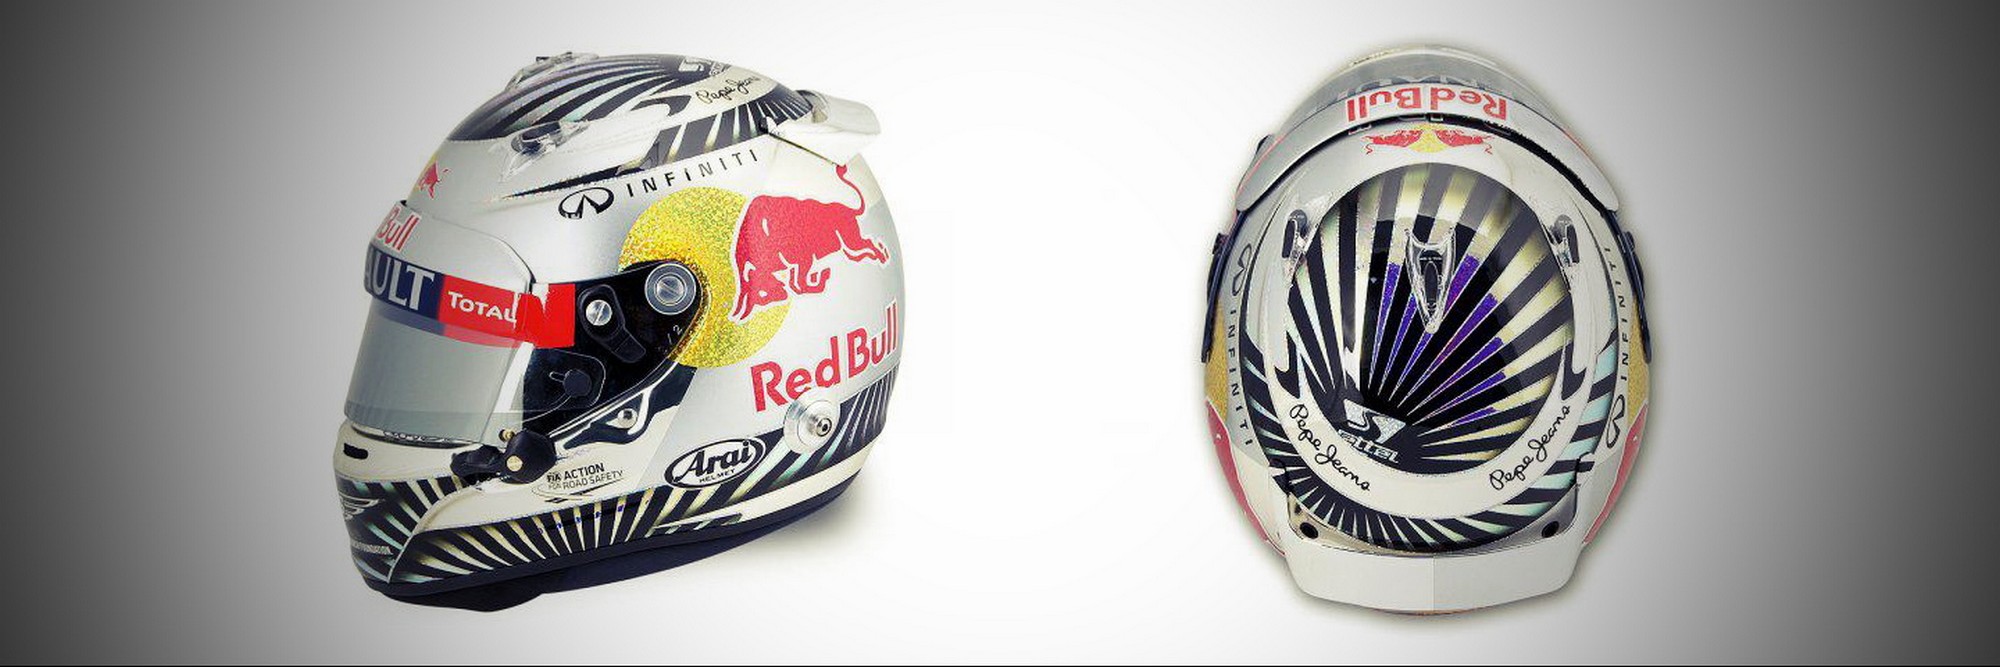 Шлем Себастьяна Феттеля на Гран-При Абу-Даби 2012 | 2012 Abu Dhabi Grand Prix helmet of Sebastian Vettel